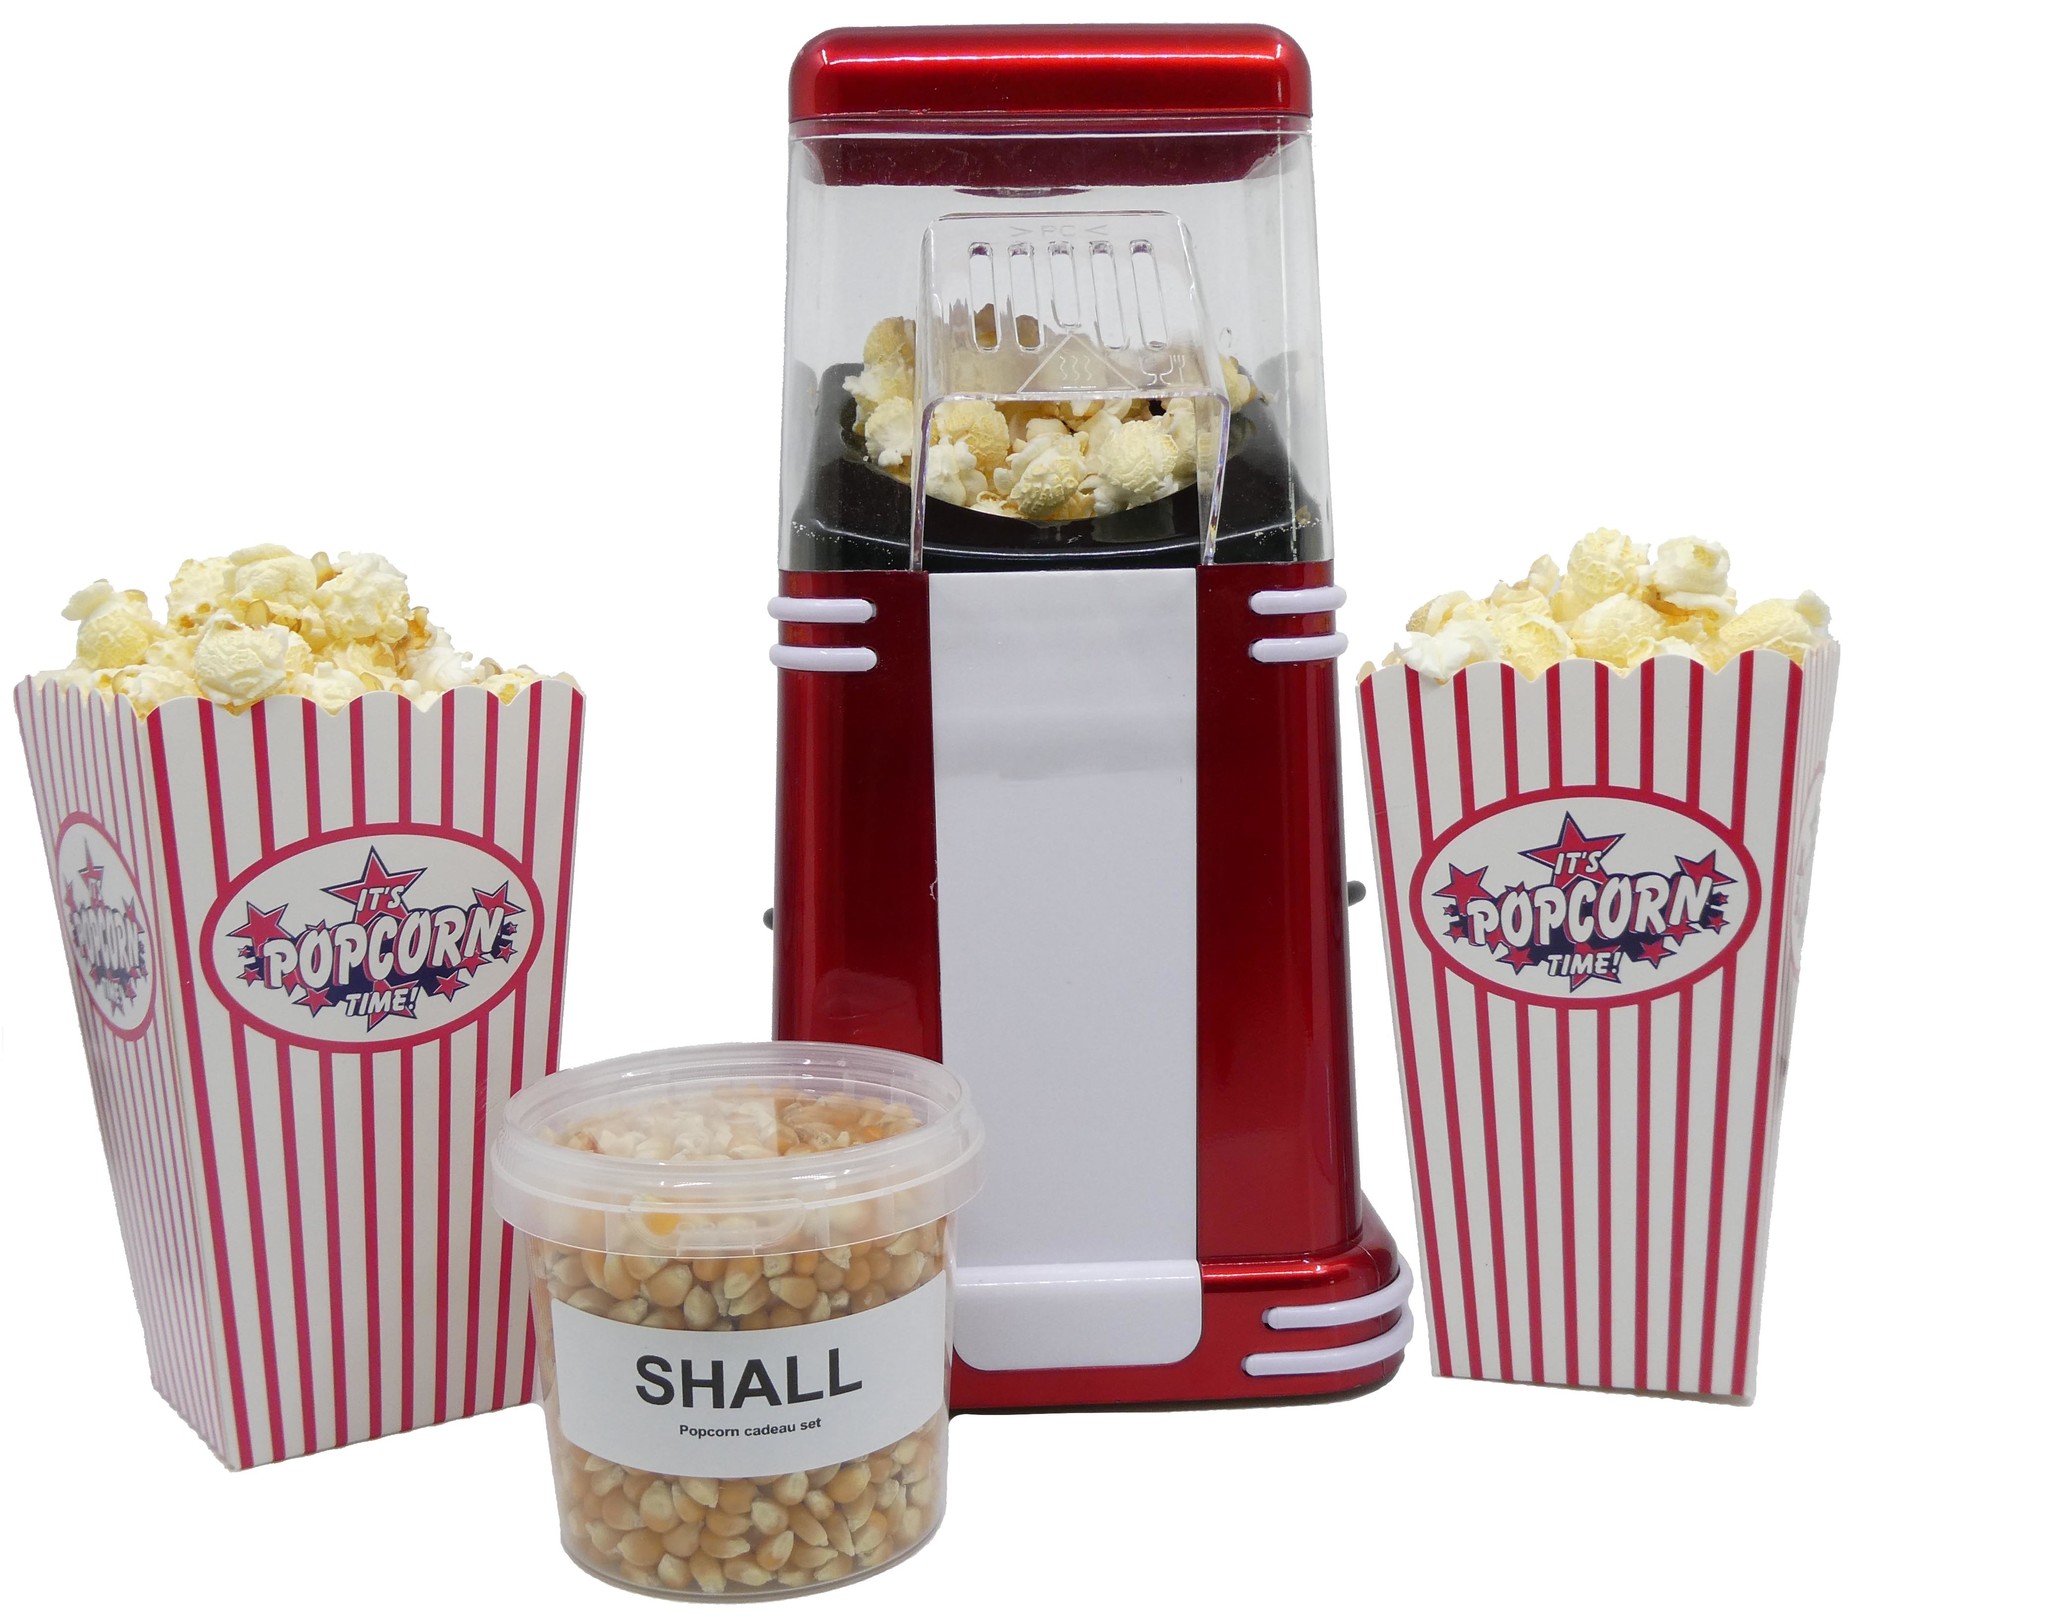 Popcornmachine rood wit retro model - cadeau kopen? - Maxtotaal